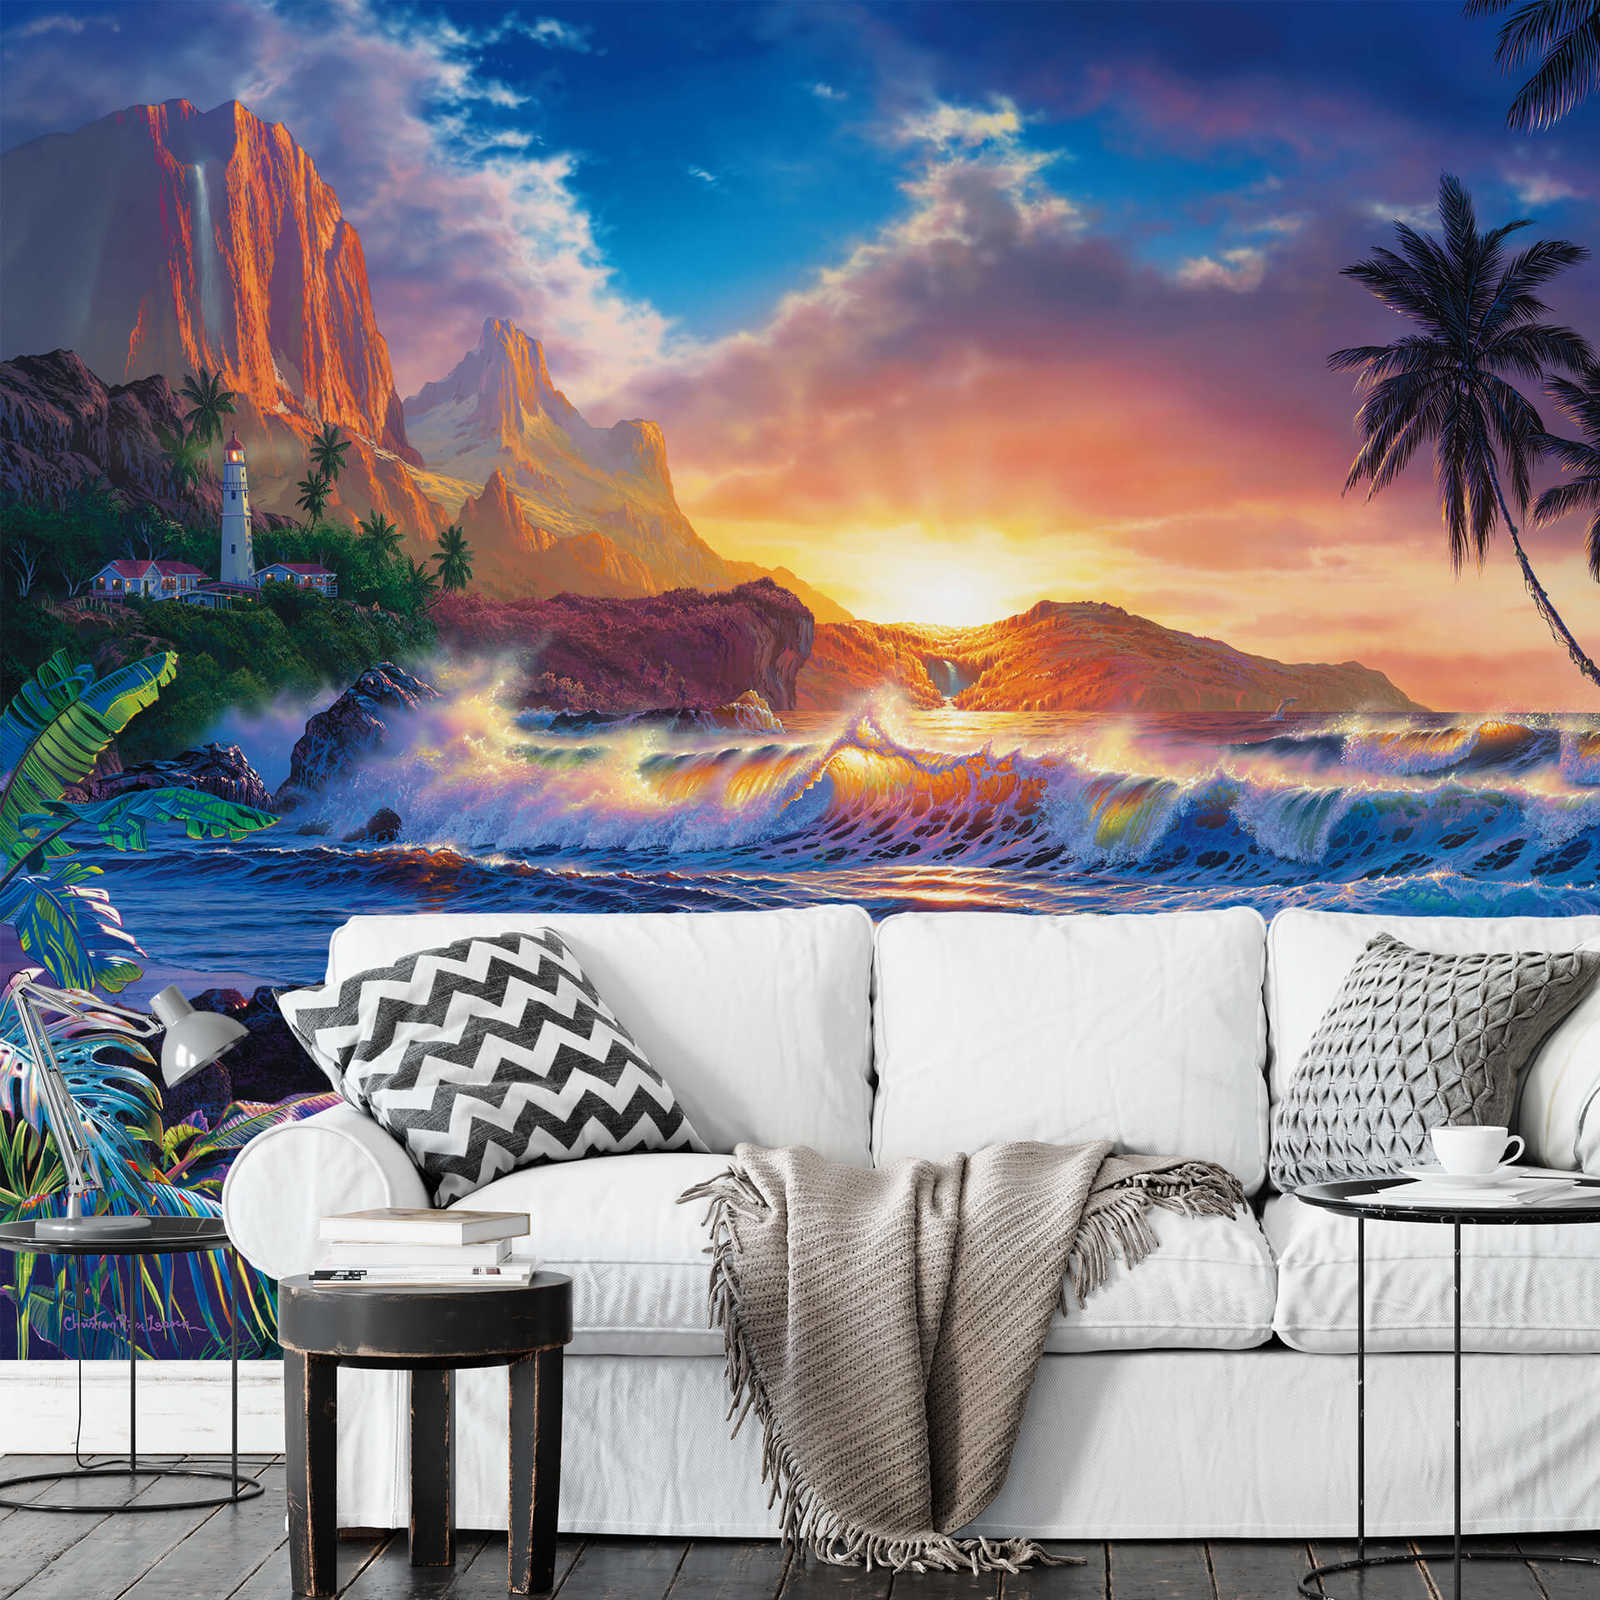             Photo wallpaper paradise landscape sea, beach & cliffs
        